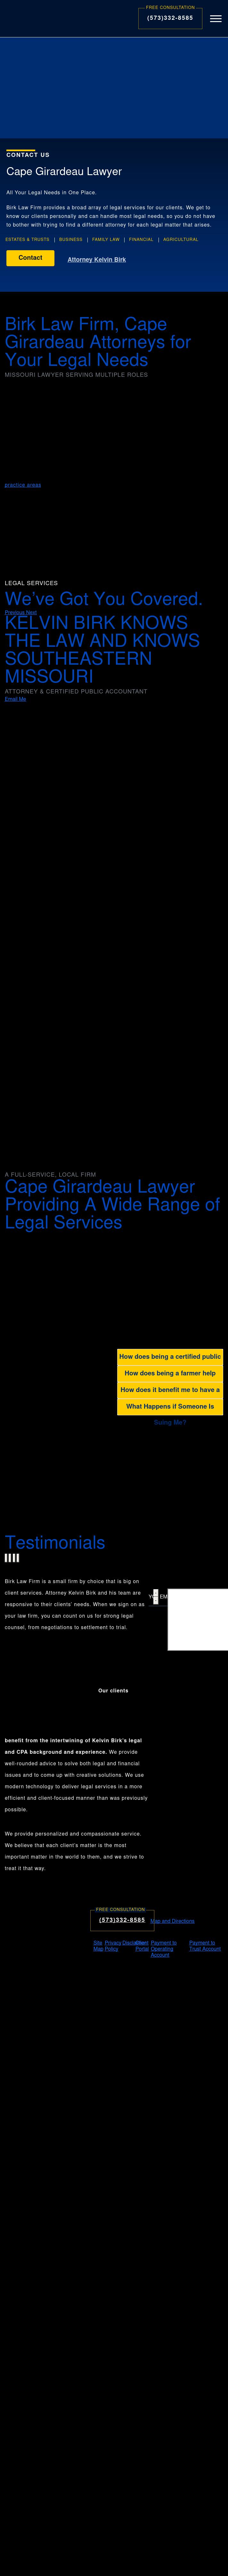 Birk Law Firm, L.C. - Cape Girardeau MO Lawyers